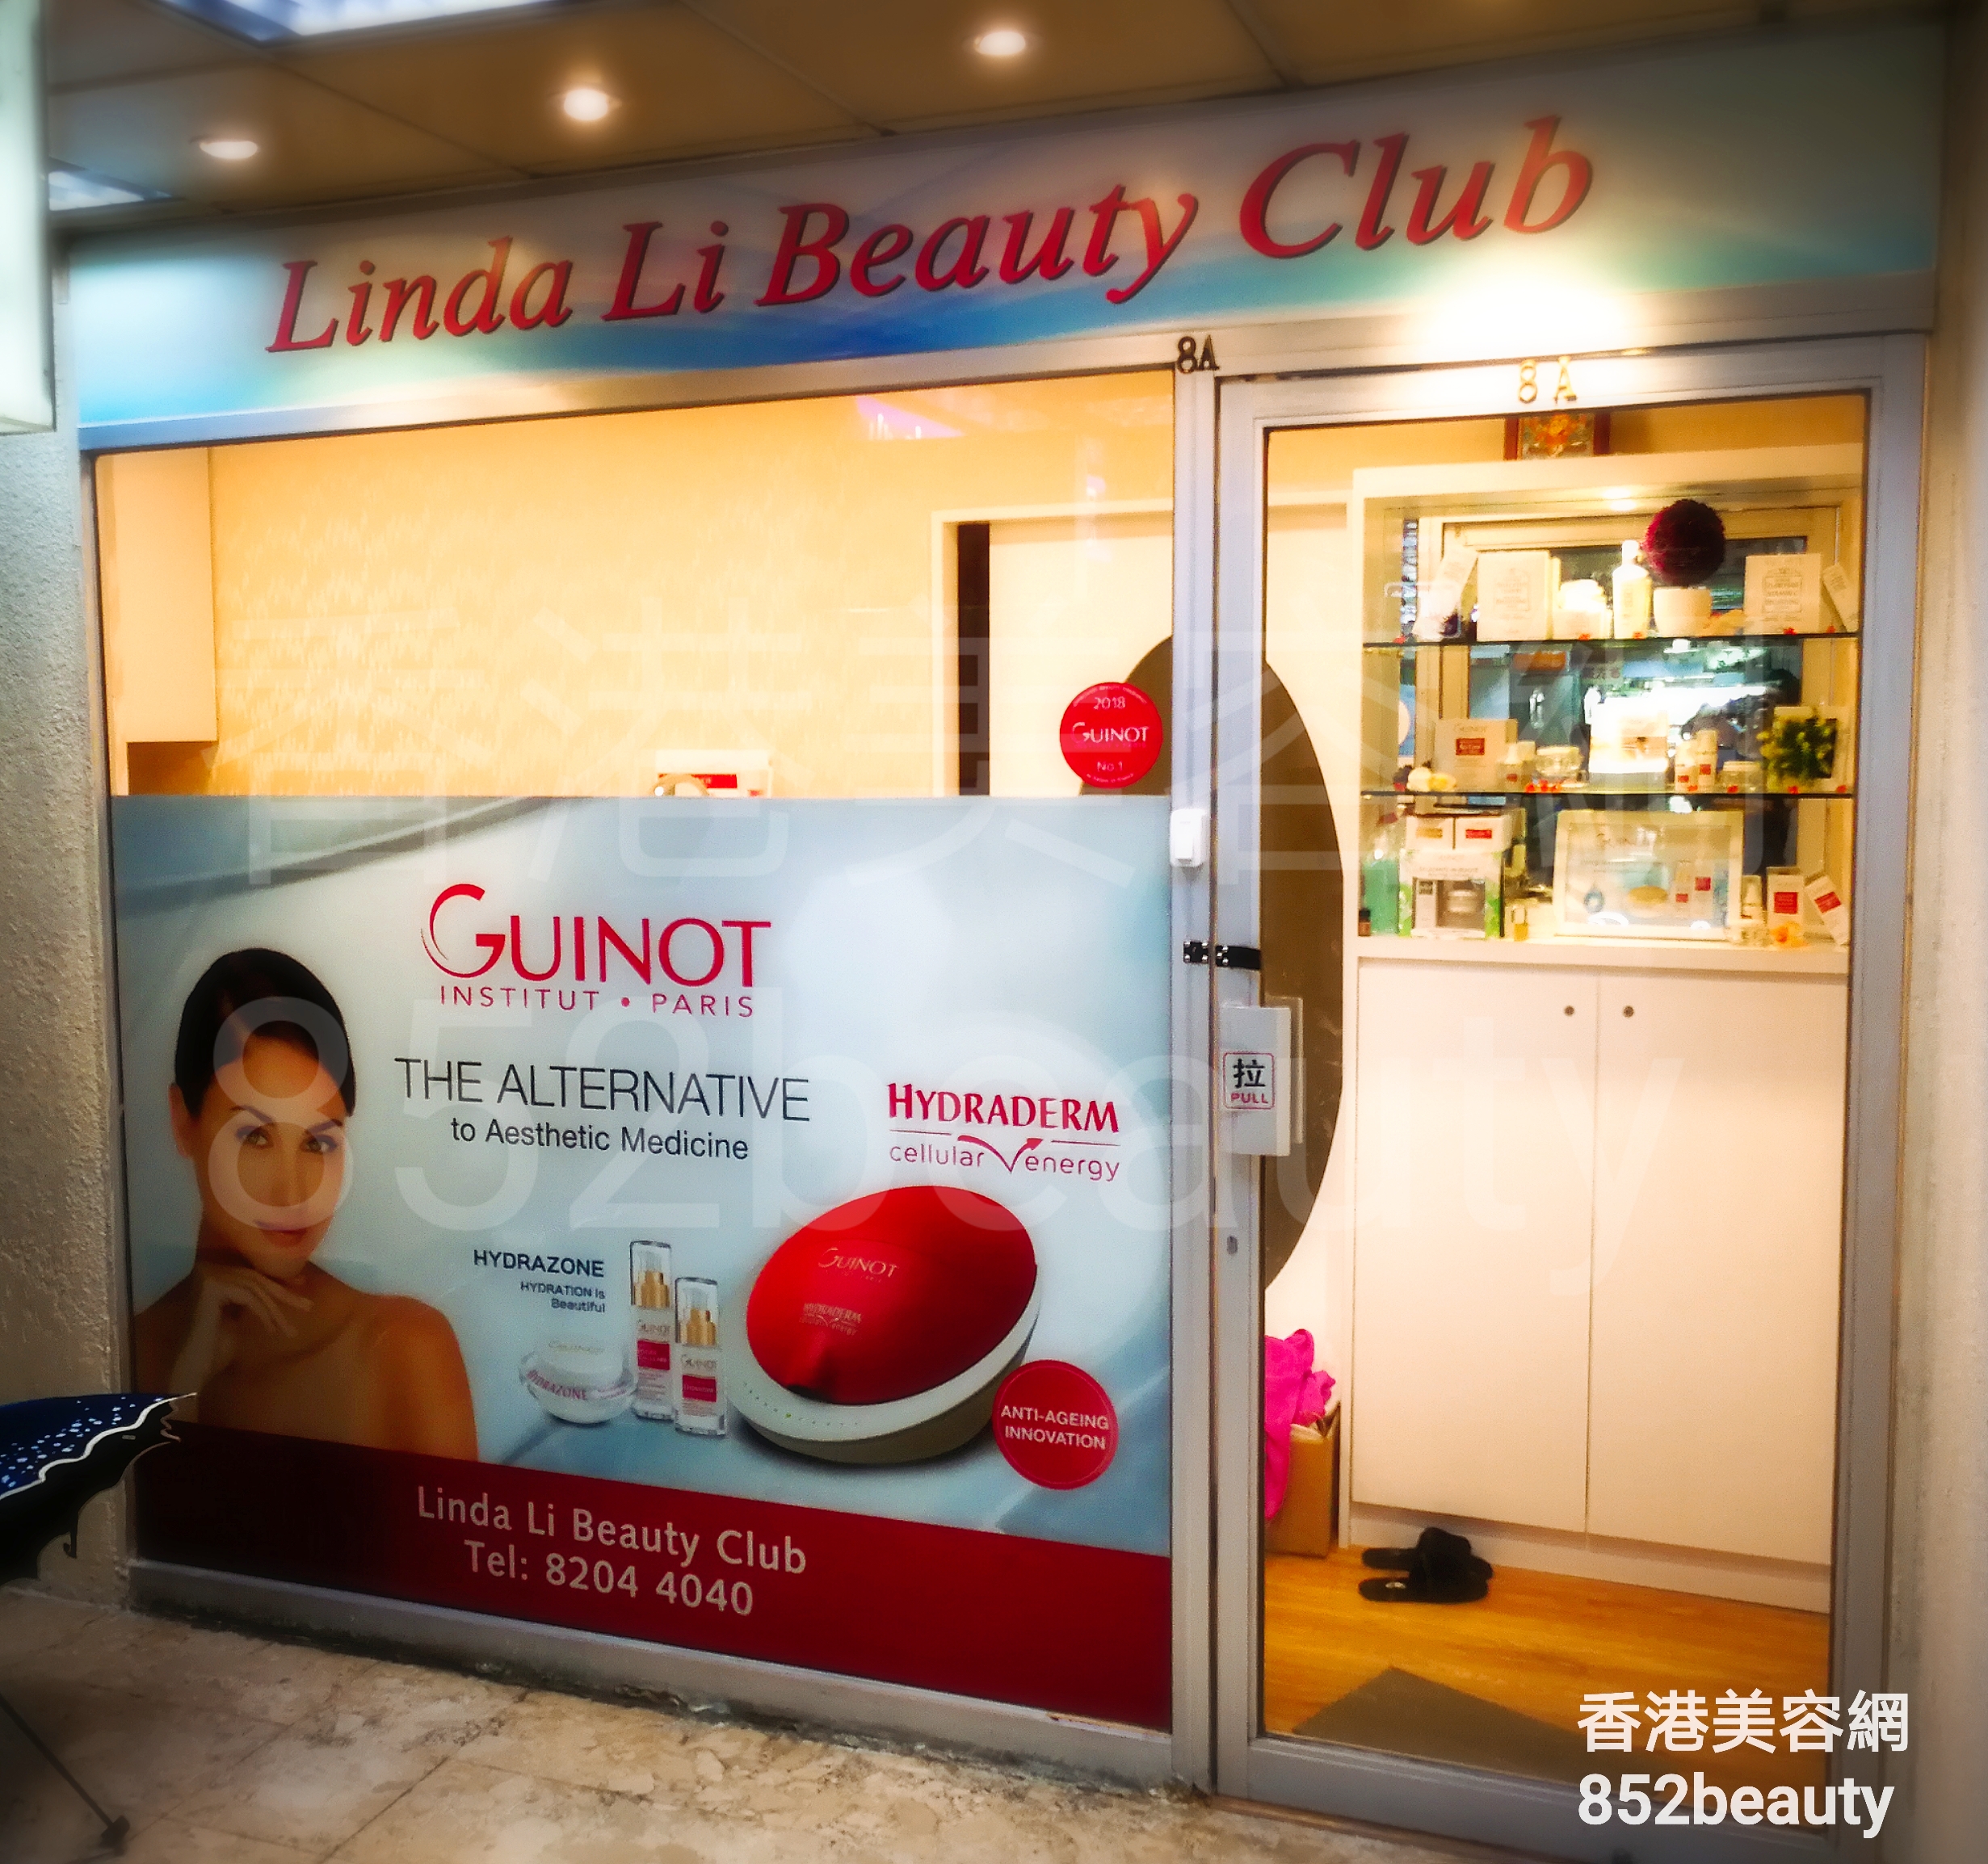 Facial Care: Linda Li Beauty Club